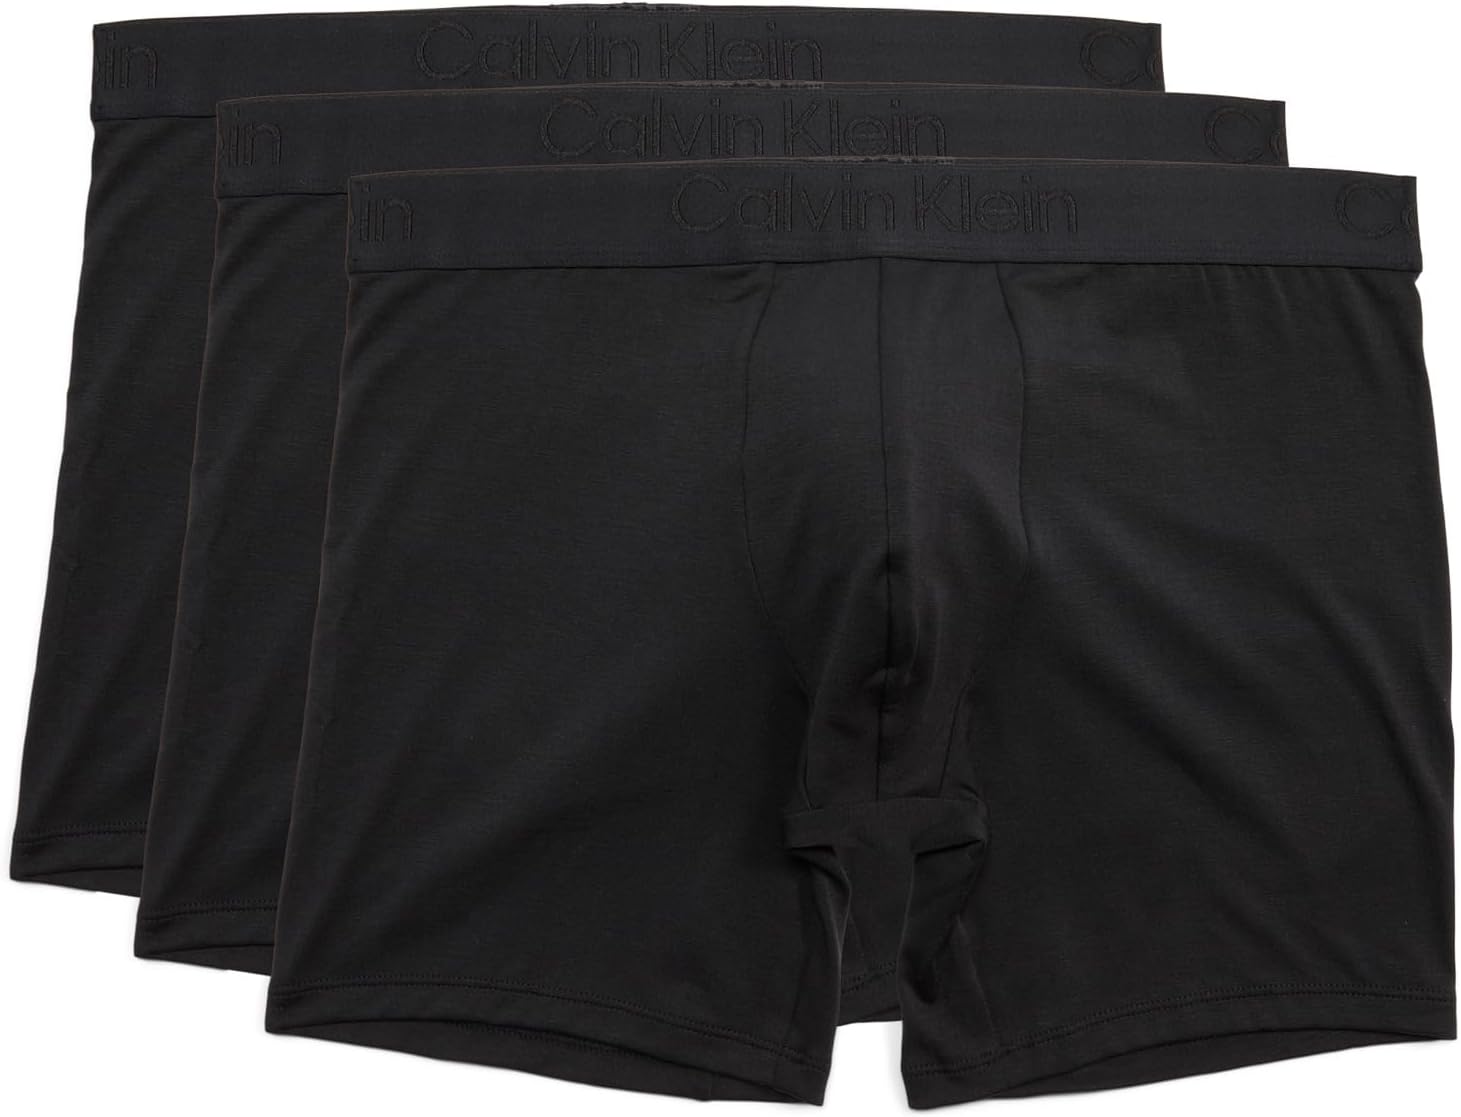 Набор черных трусов-боксеров CK, 3 шт. Calvin Klein Underwear, цвет Black/Black/Black кроссовки calvin klein vulc black